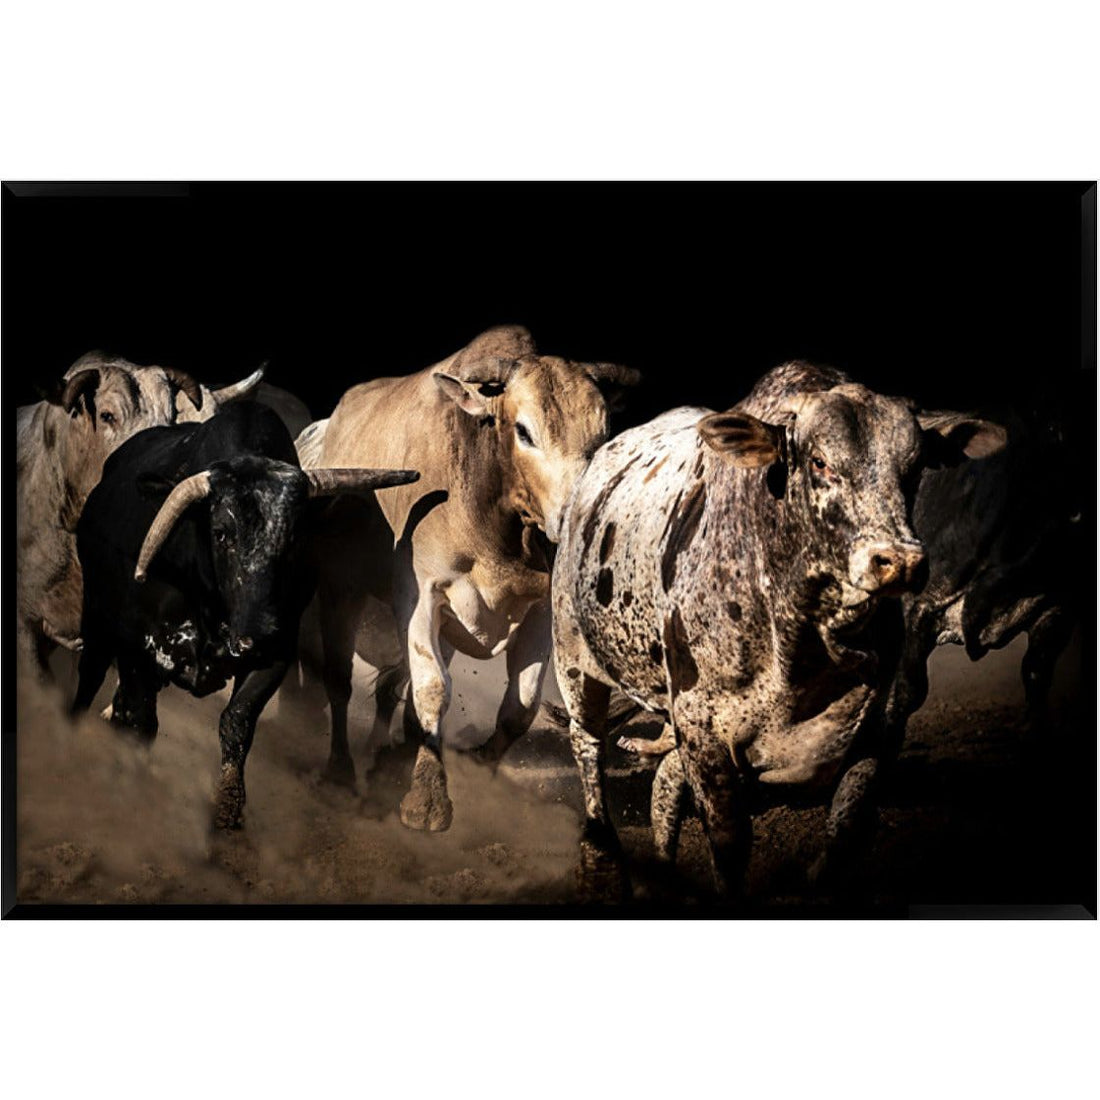 “Velvertoft bulls” Sold enquiries welcome